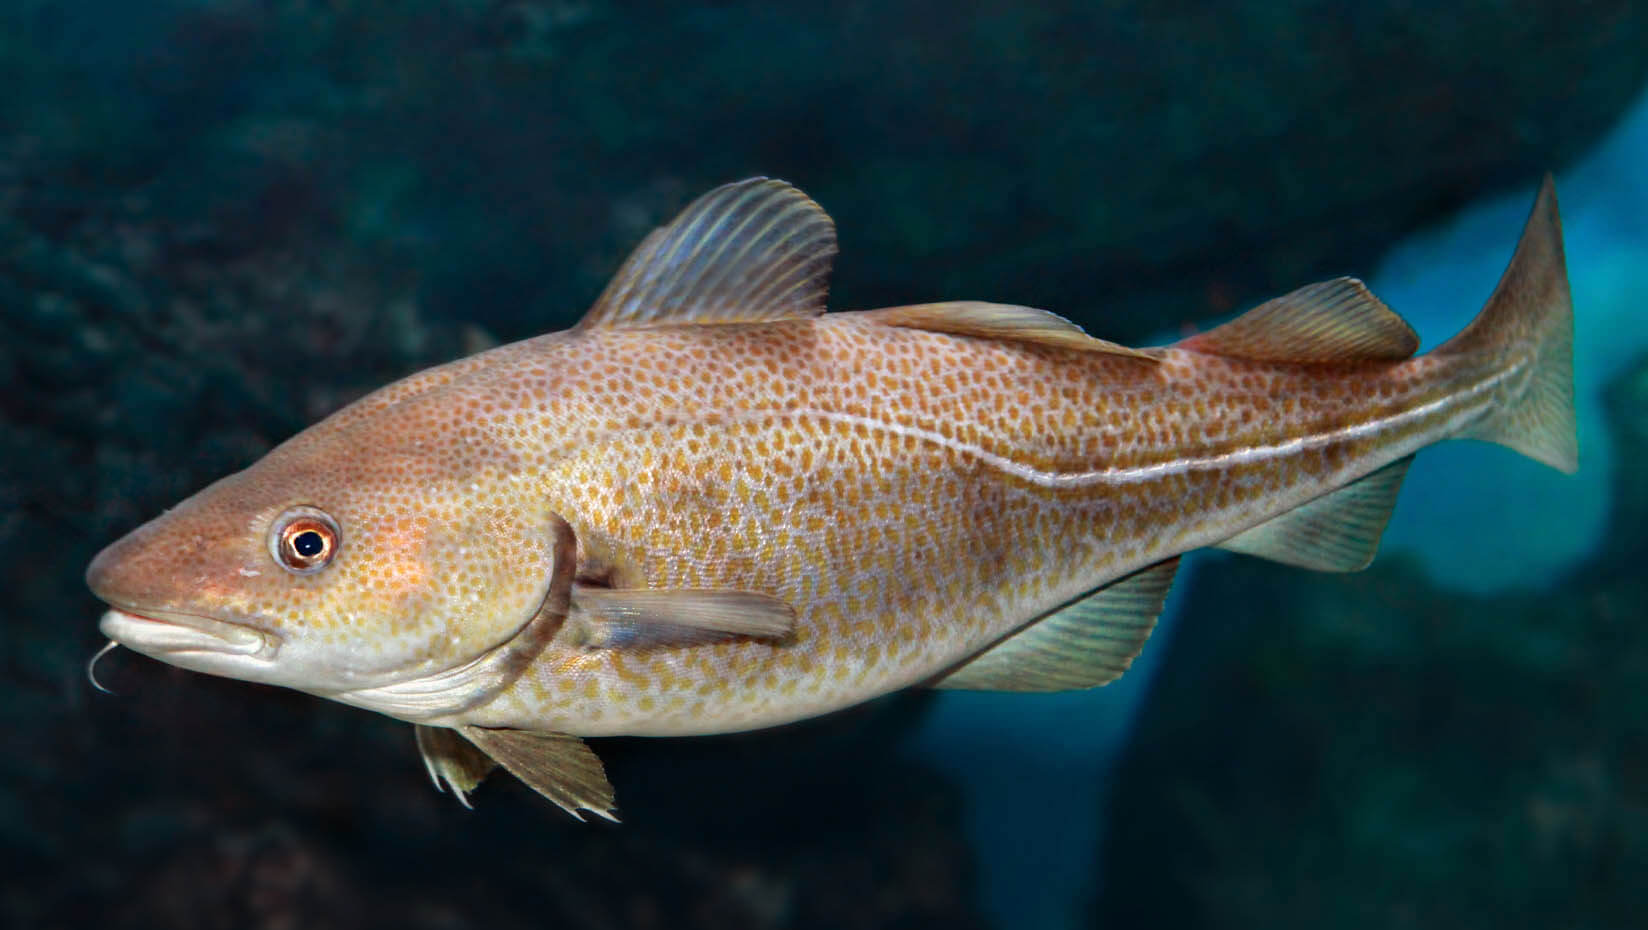 A photo of a cod